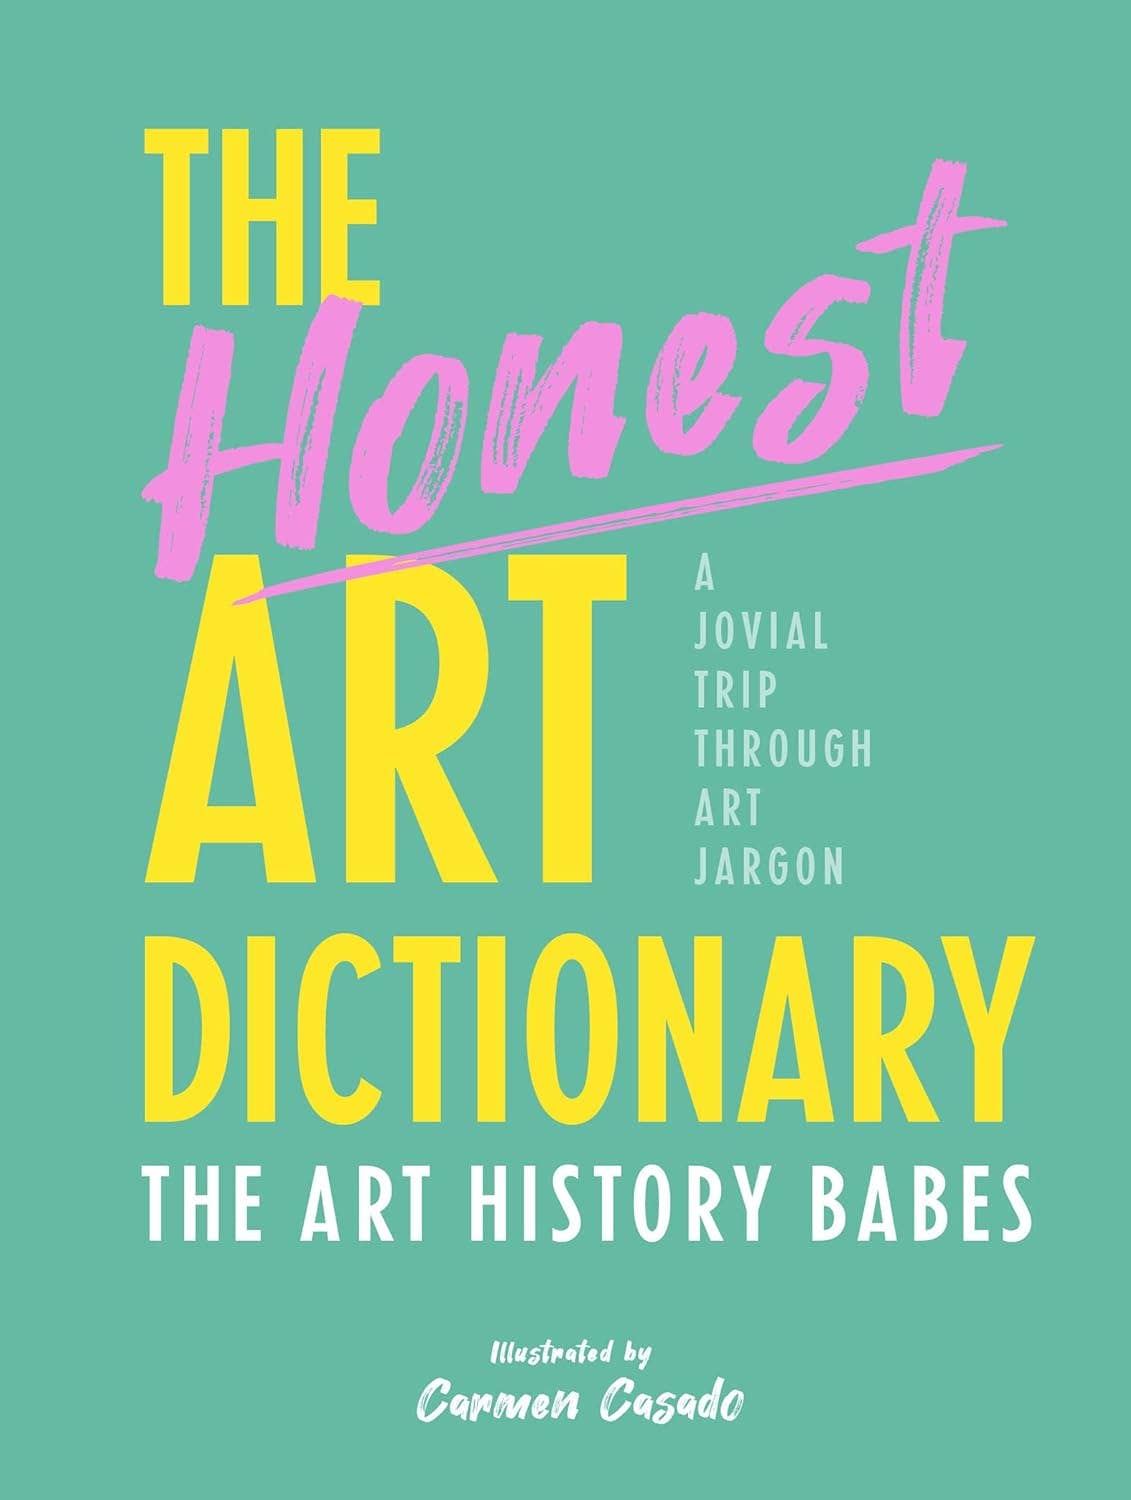 Honest Art Dictionary: A Jovial Trip Through Art Jargon - The Oddity Den